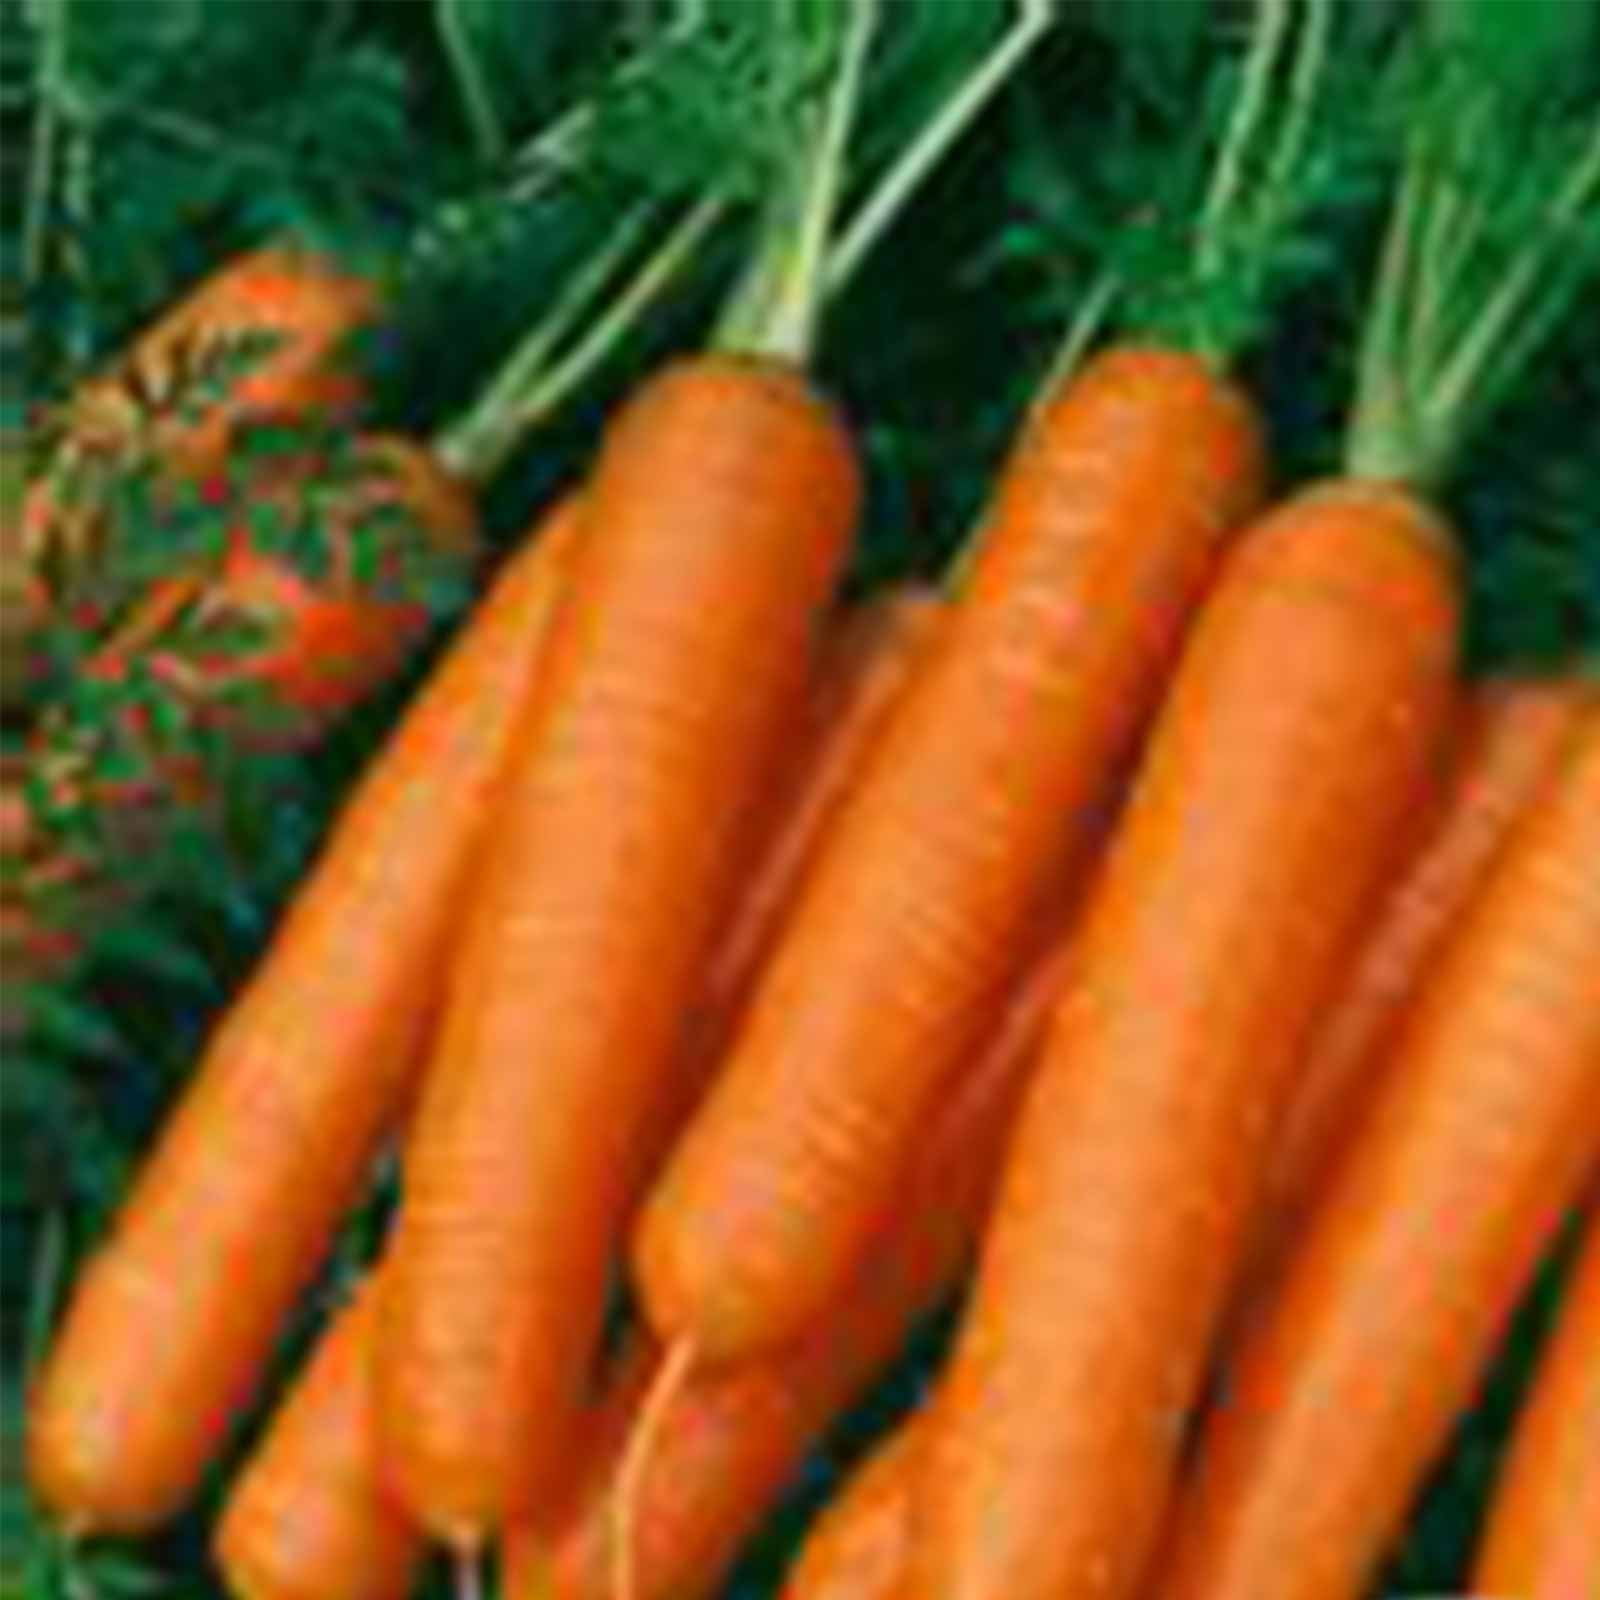 100 Scarlet Nantes Carrot Seeds